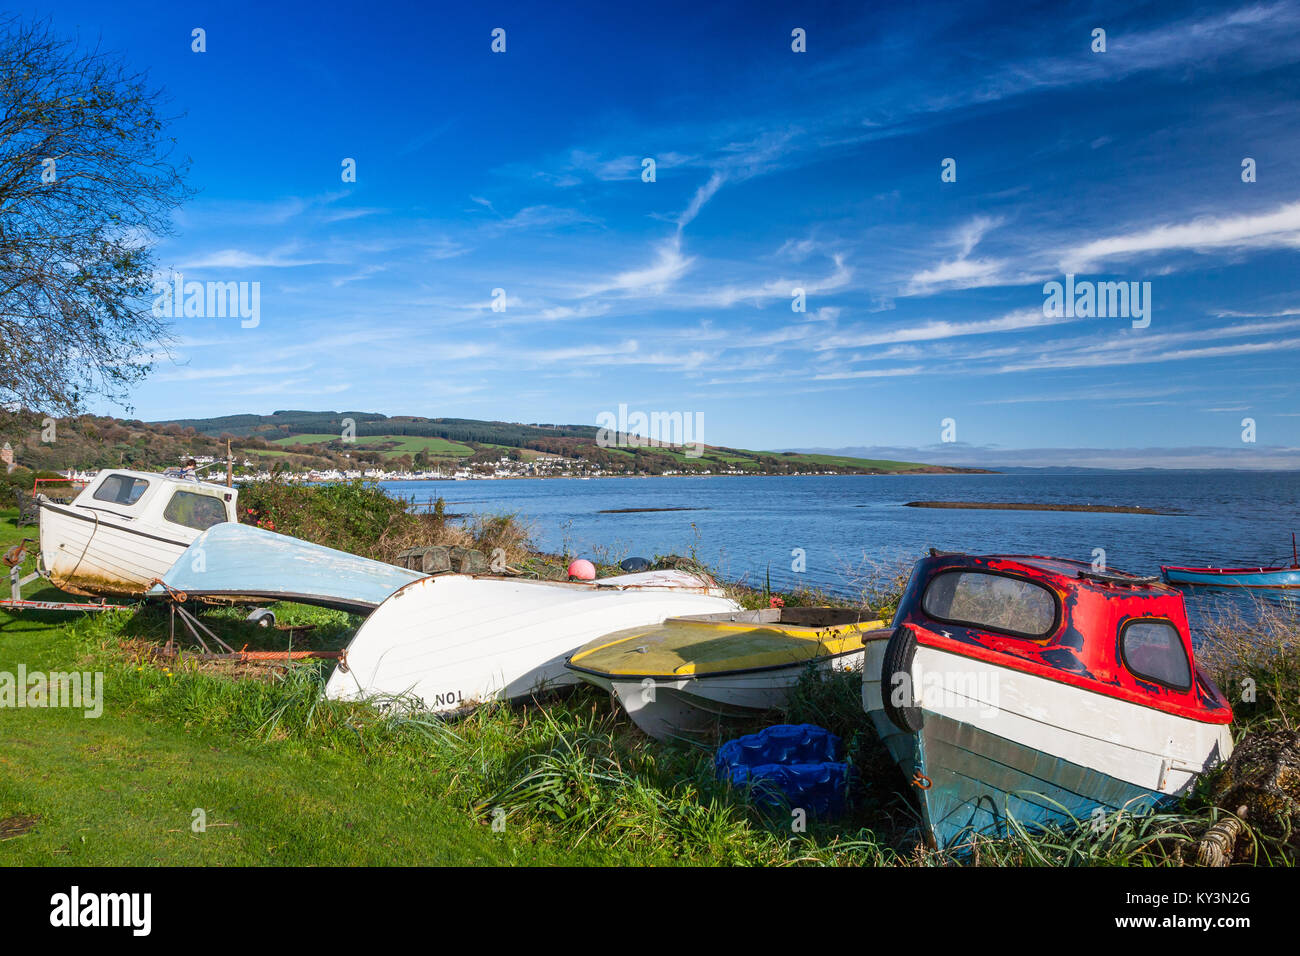 Small fishing boats sitting on a beach at Lamlash Bay, Isle of Arran, Scotland Stock Photo